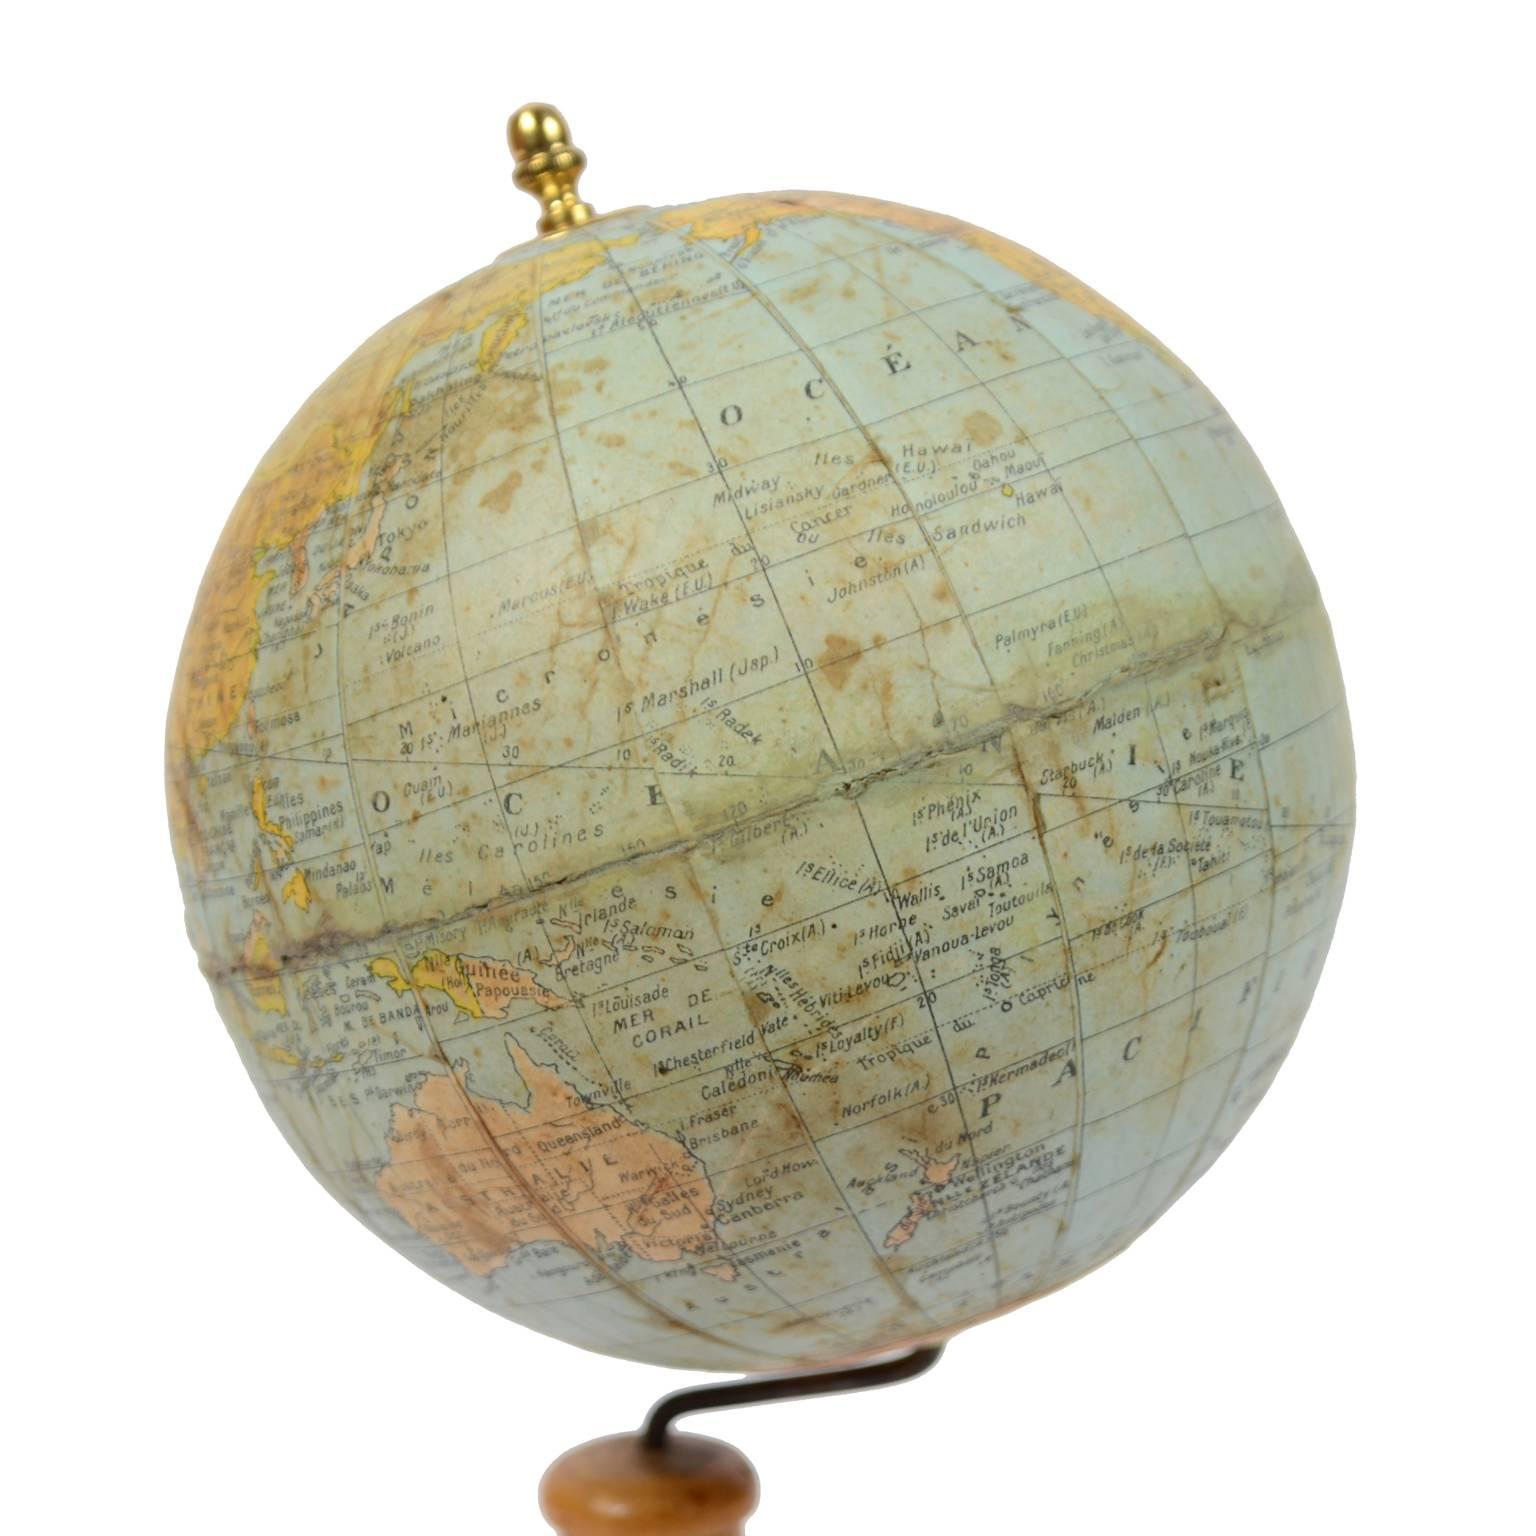 French Terrestrial Globe Edited by G. Thomas Éditeur Paris in 1930s